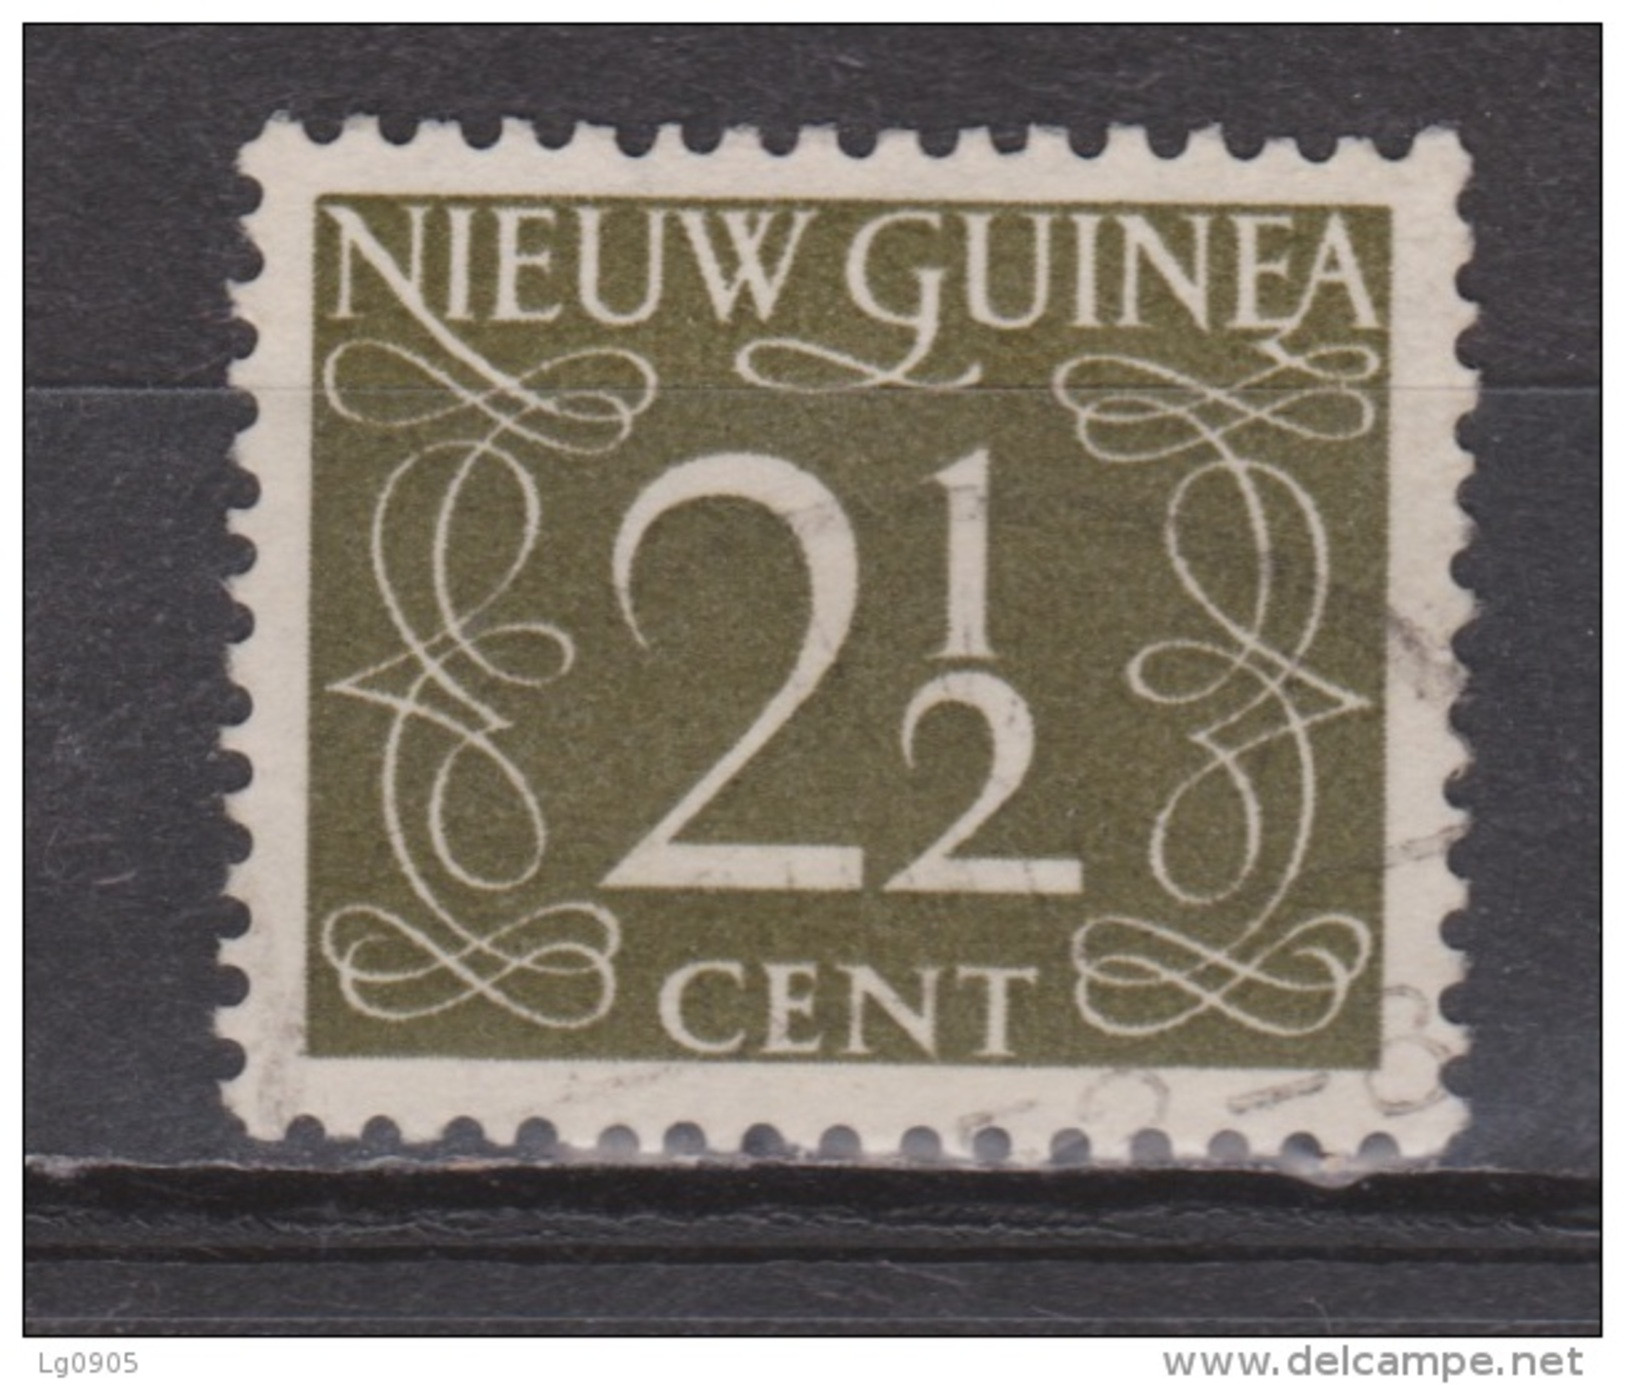 Nederlands Nieuw Guinea 3 Used ; Cijfer 1950 ; NOW ALL STAMPS OF NETHERLANDS NEW GUINEA - Nuova Guinea Olandese